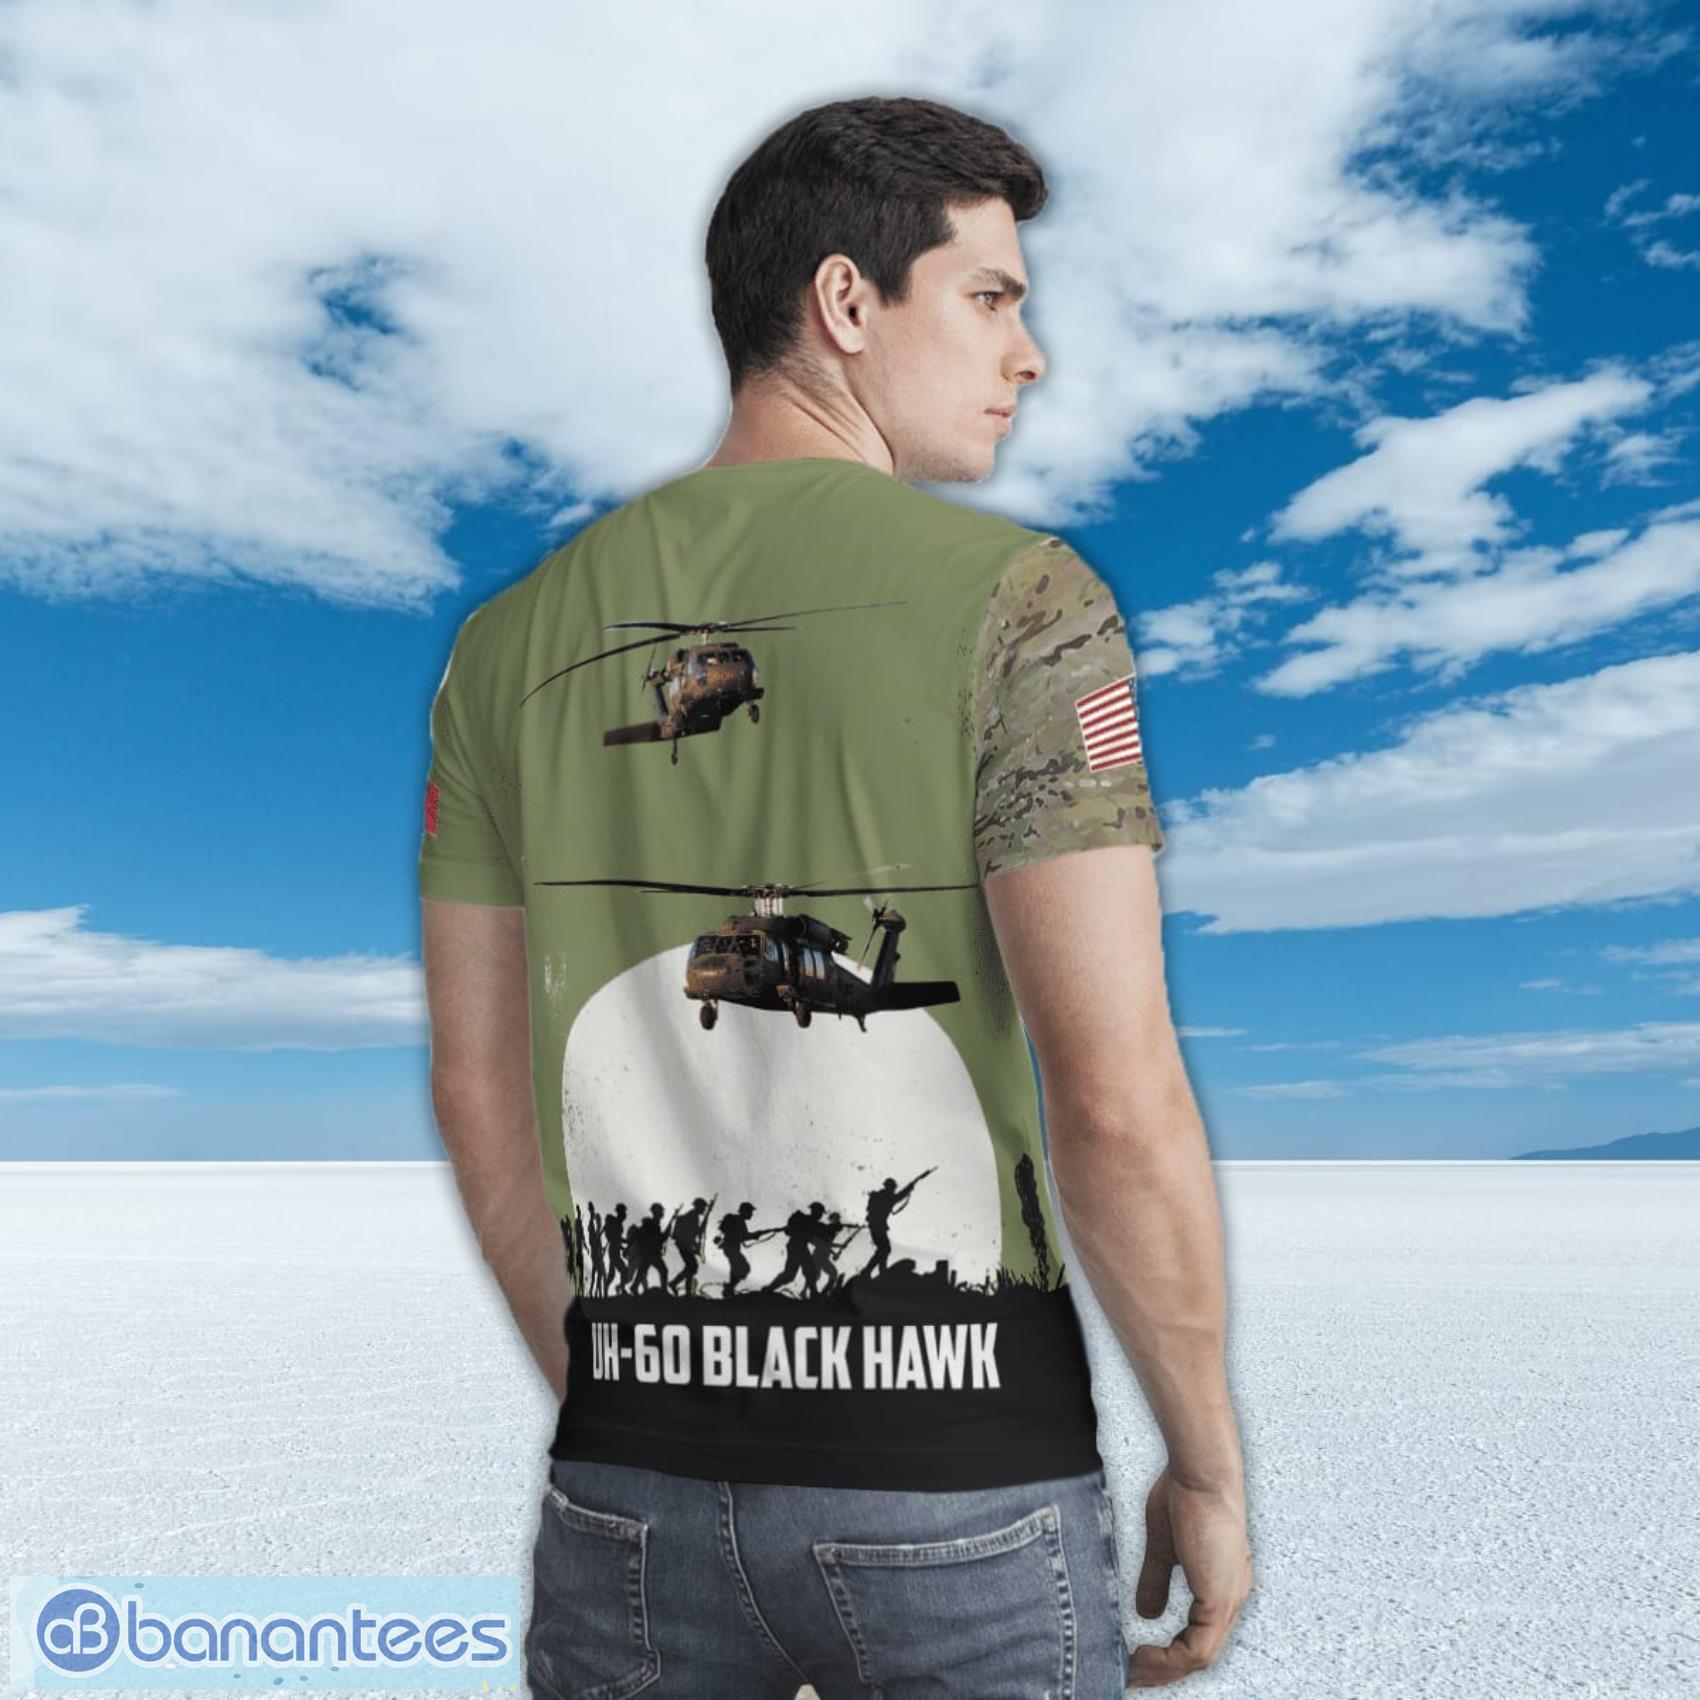 Beautiful Red Black Camo Army HUNGARY 3D Print Slim T-Shirt Tops